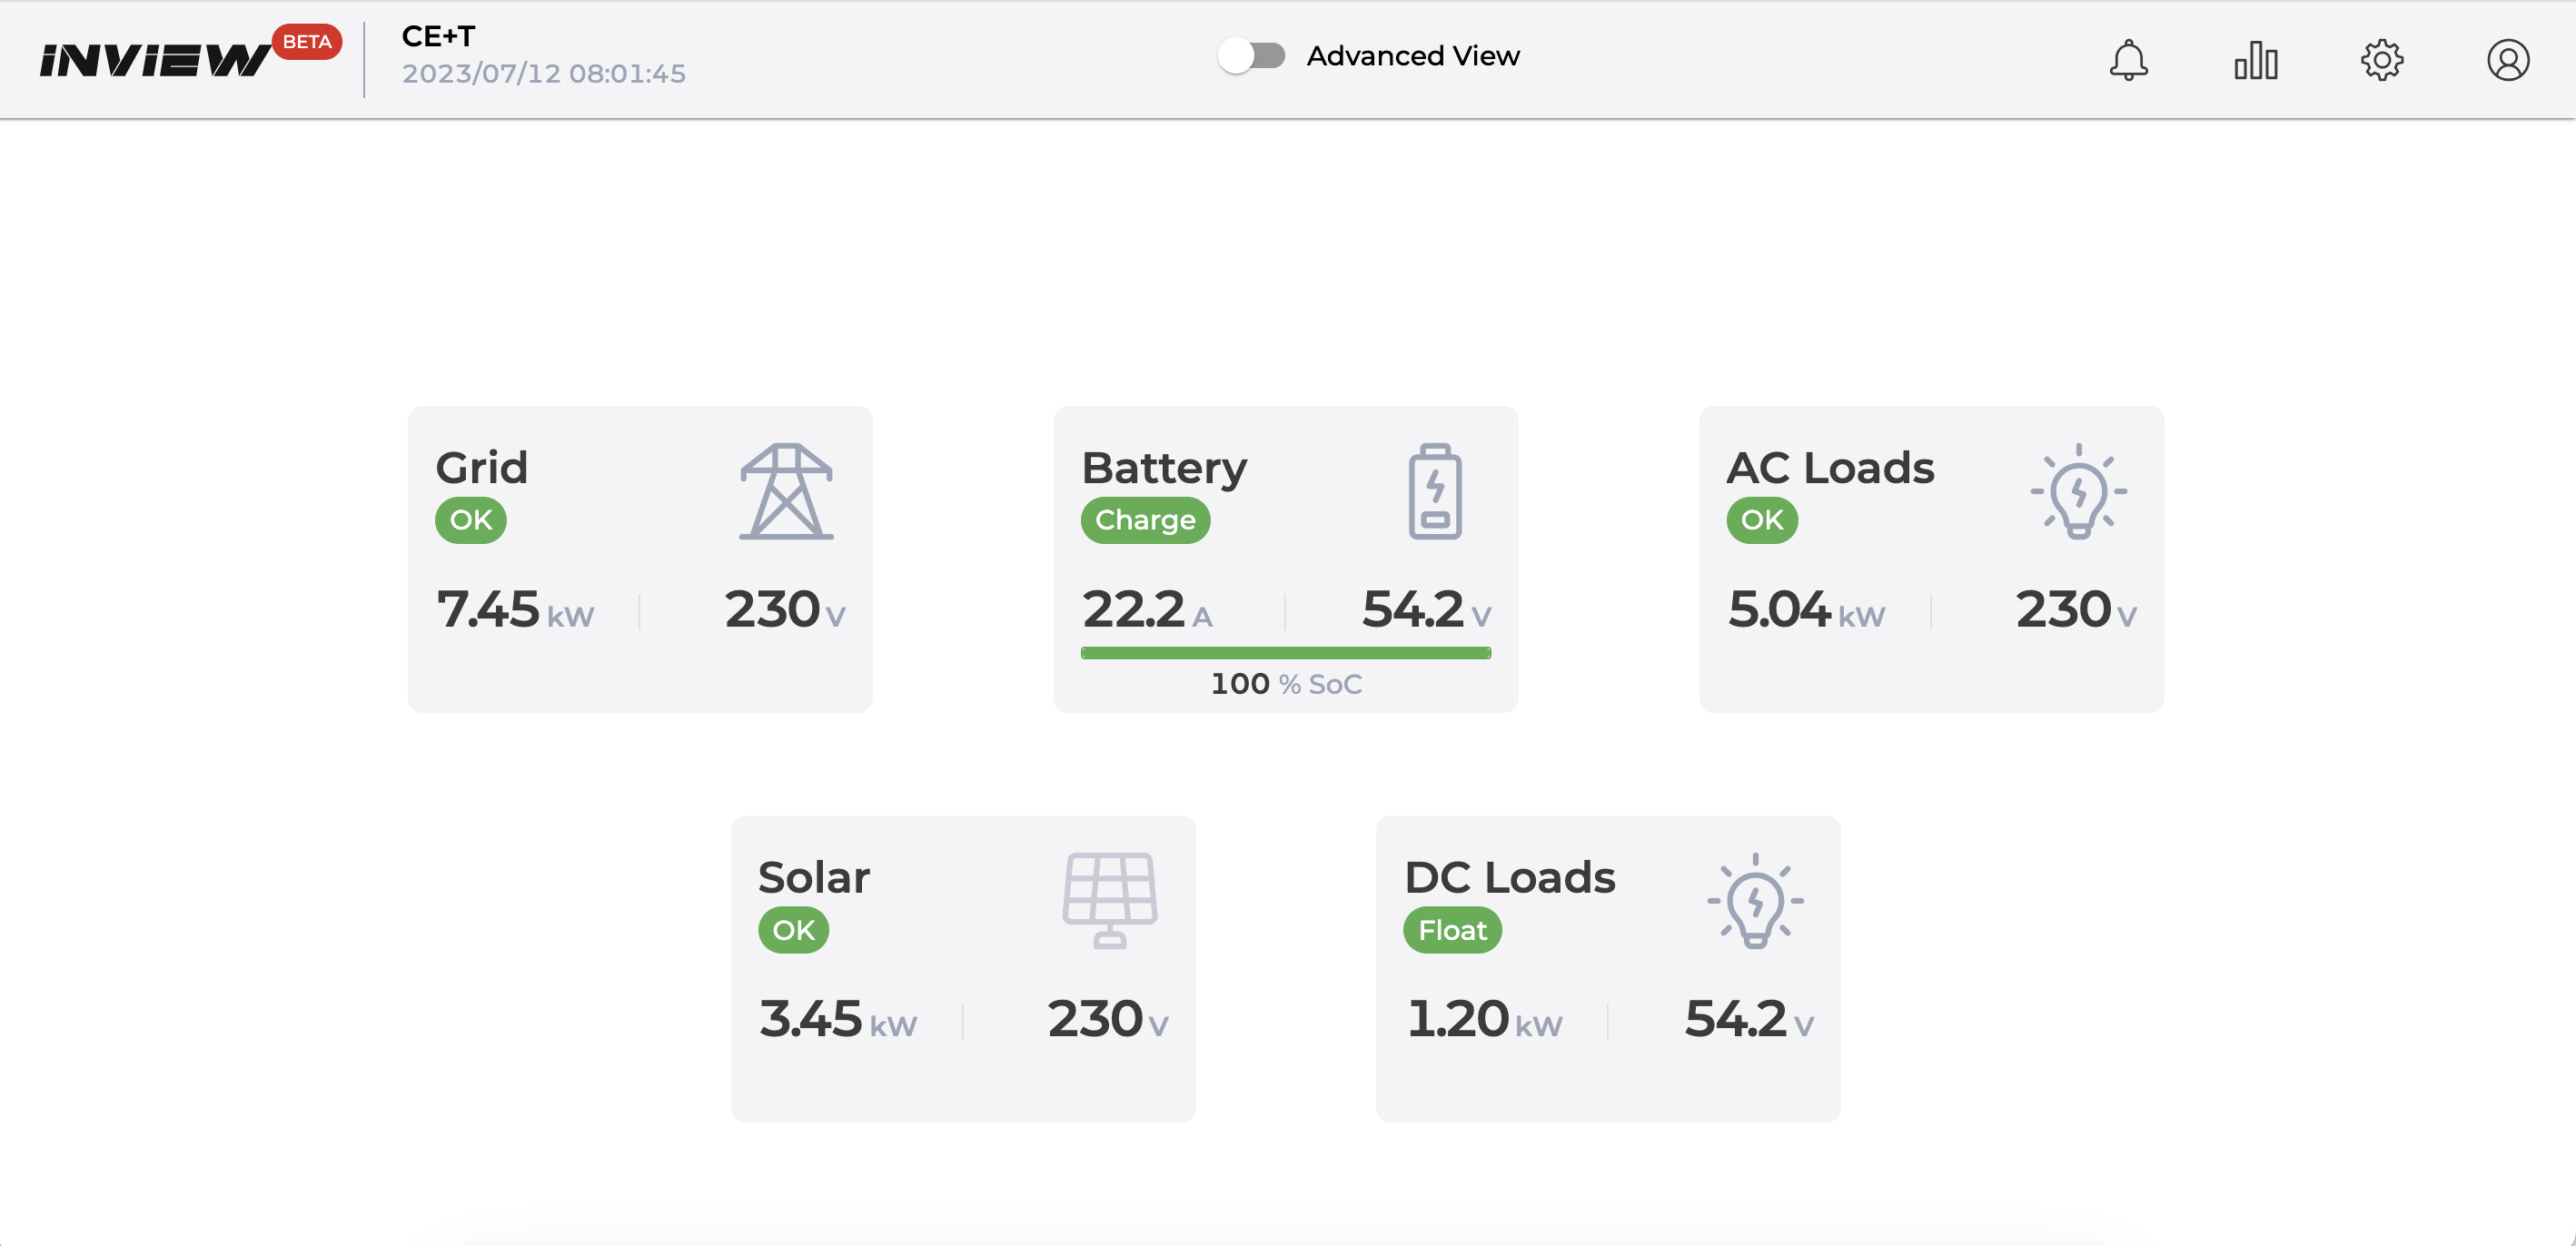 Inview 6 - Emulator - Grid, batteries, pv, ac loads, dc loads